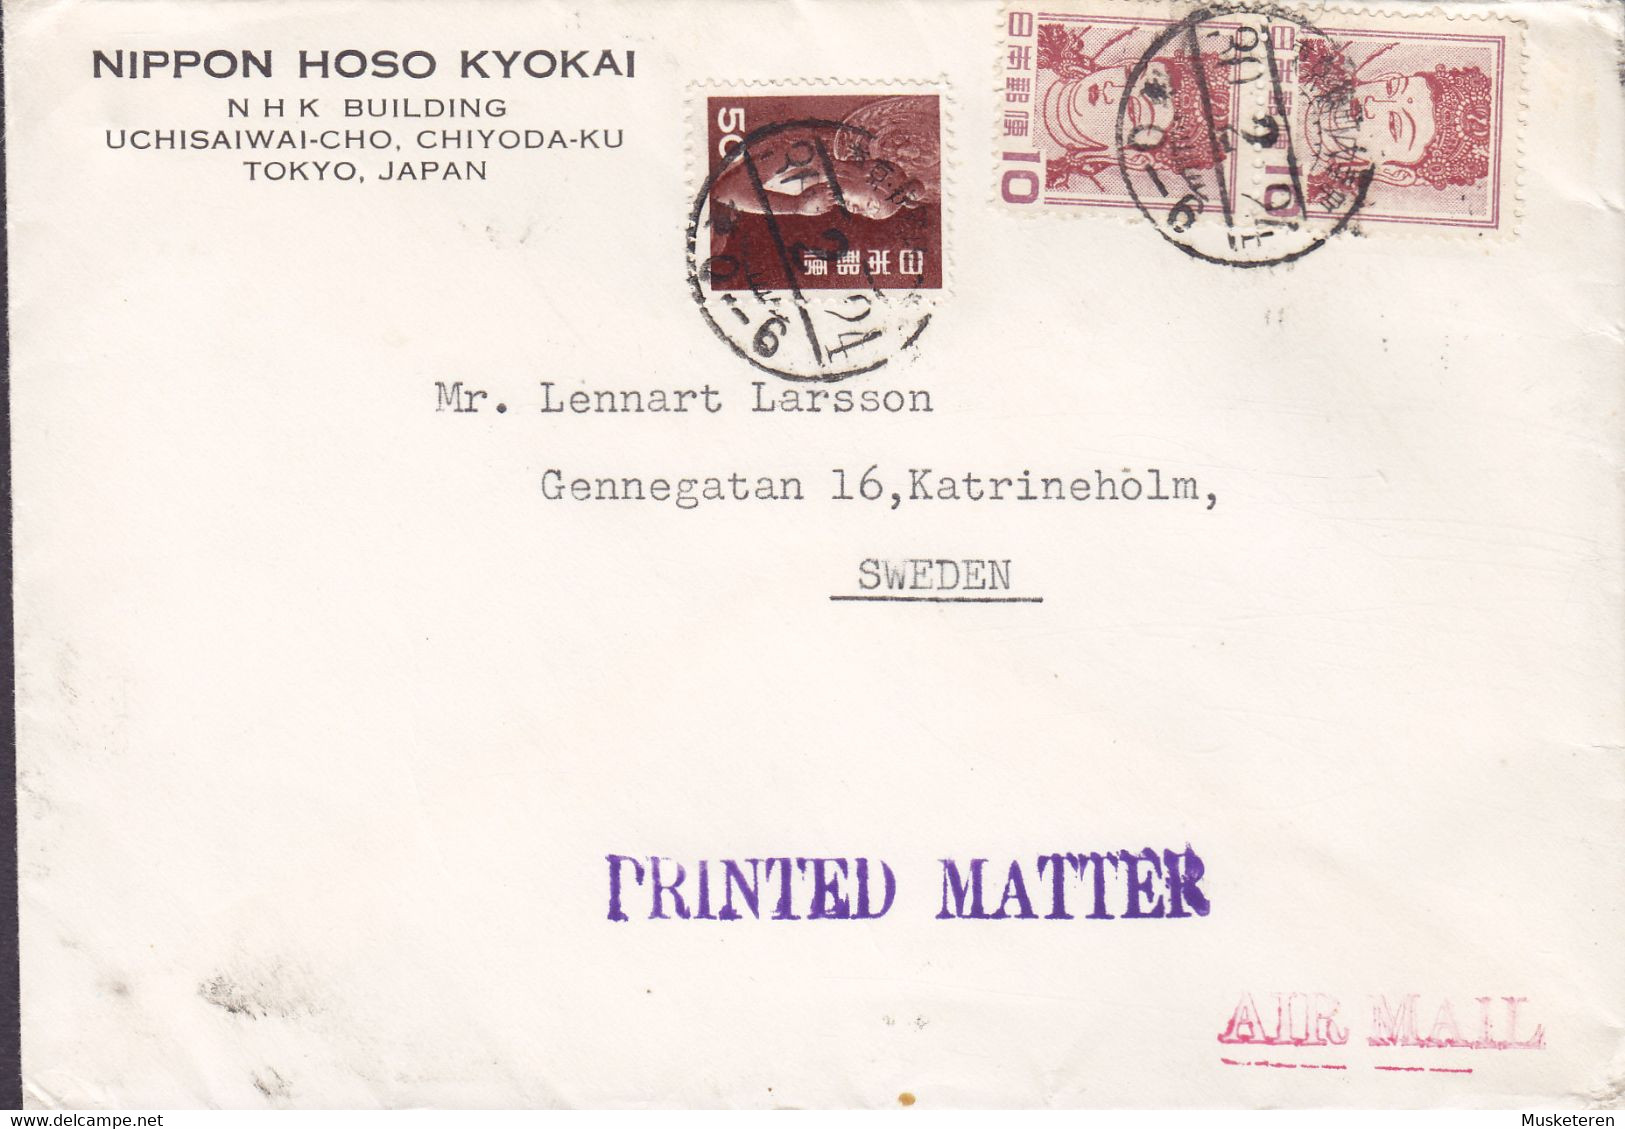 NIPPON HOSO KYOKAI Japan Broadcasting Corporastion CHIYODA-KU Tokyo 1955 Cover Brief KATRINEHOLM Sweden Printed Matter - Storia Postale